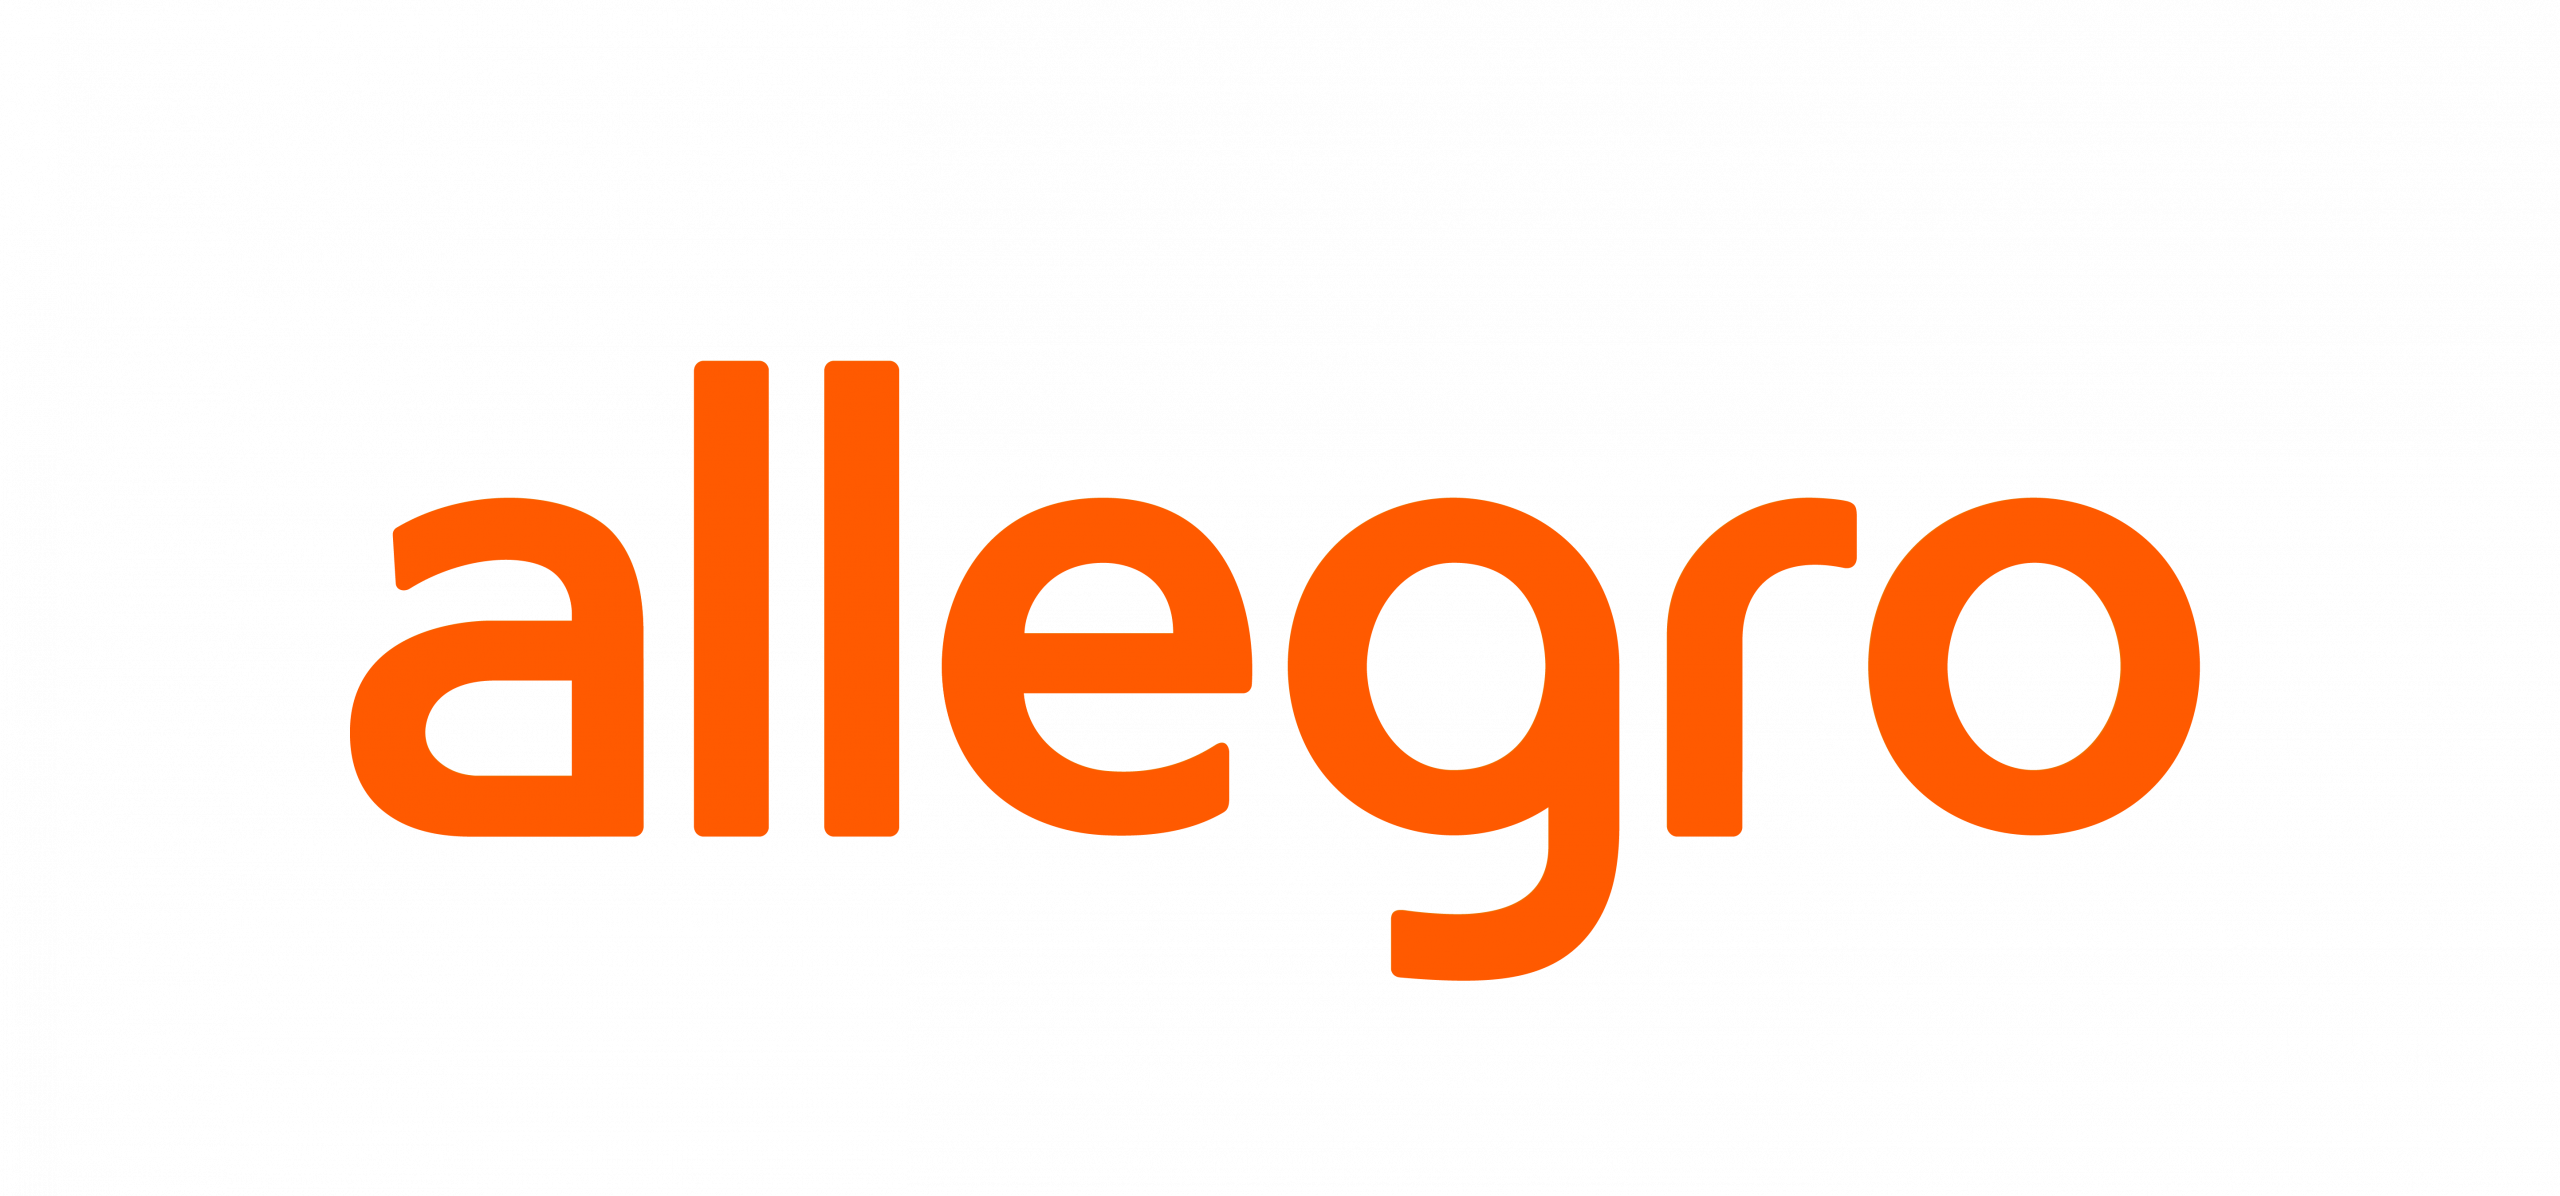 allegro_logo.png